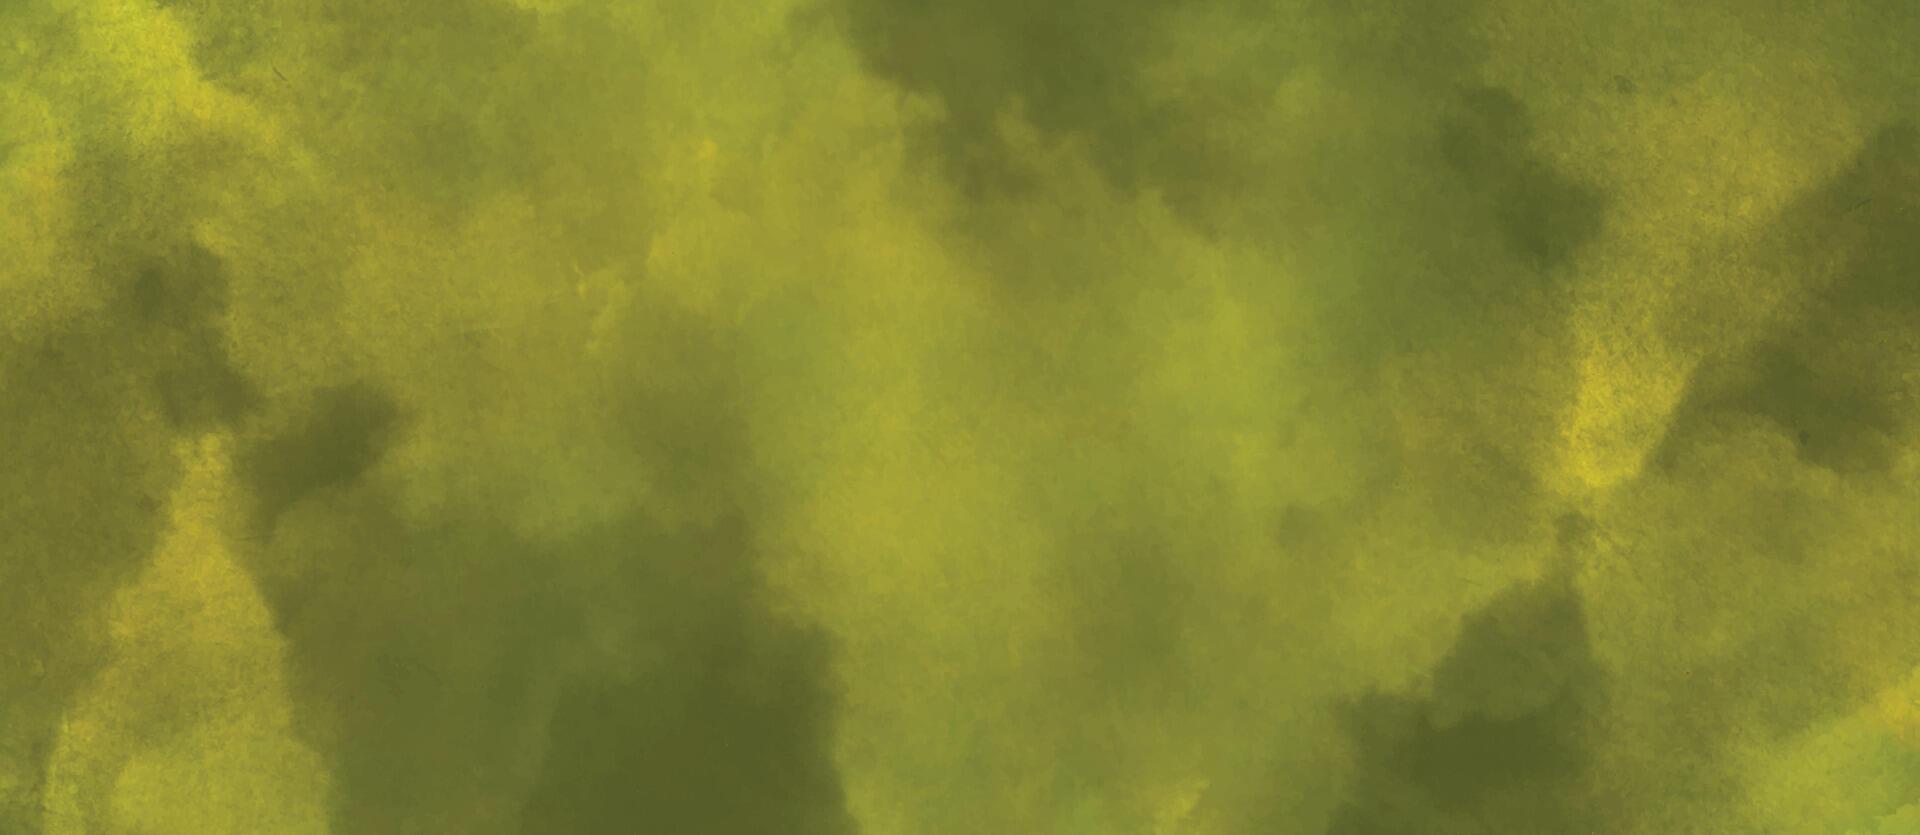 verde y amarillo antecedentes. acuarela antecedentes. oro verde antecedentes. resumen grunge textura. vector